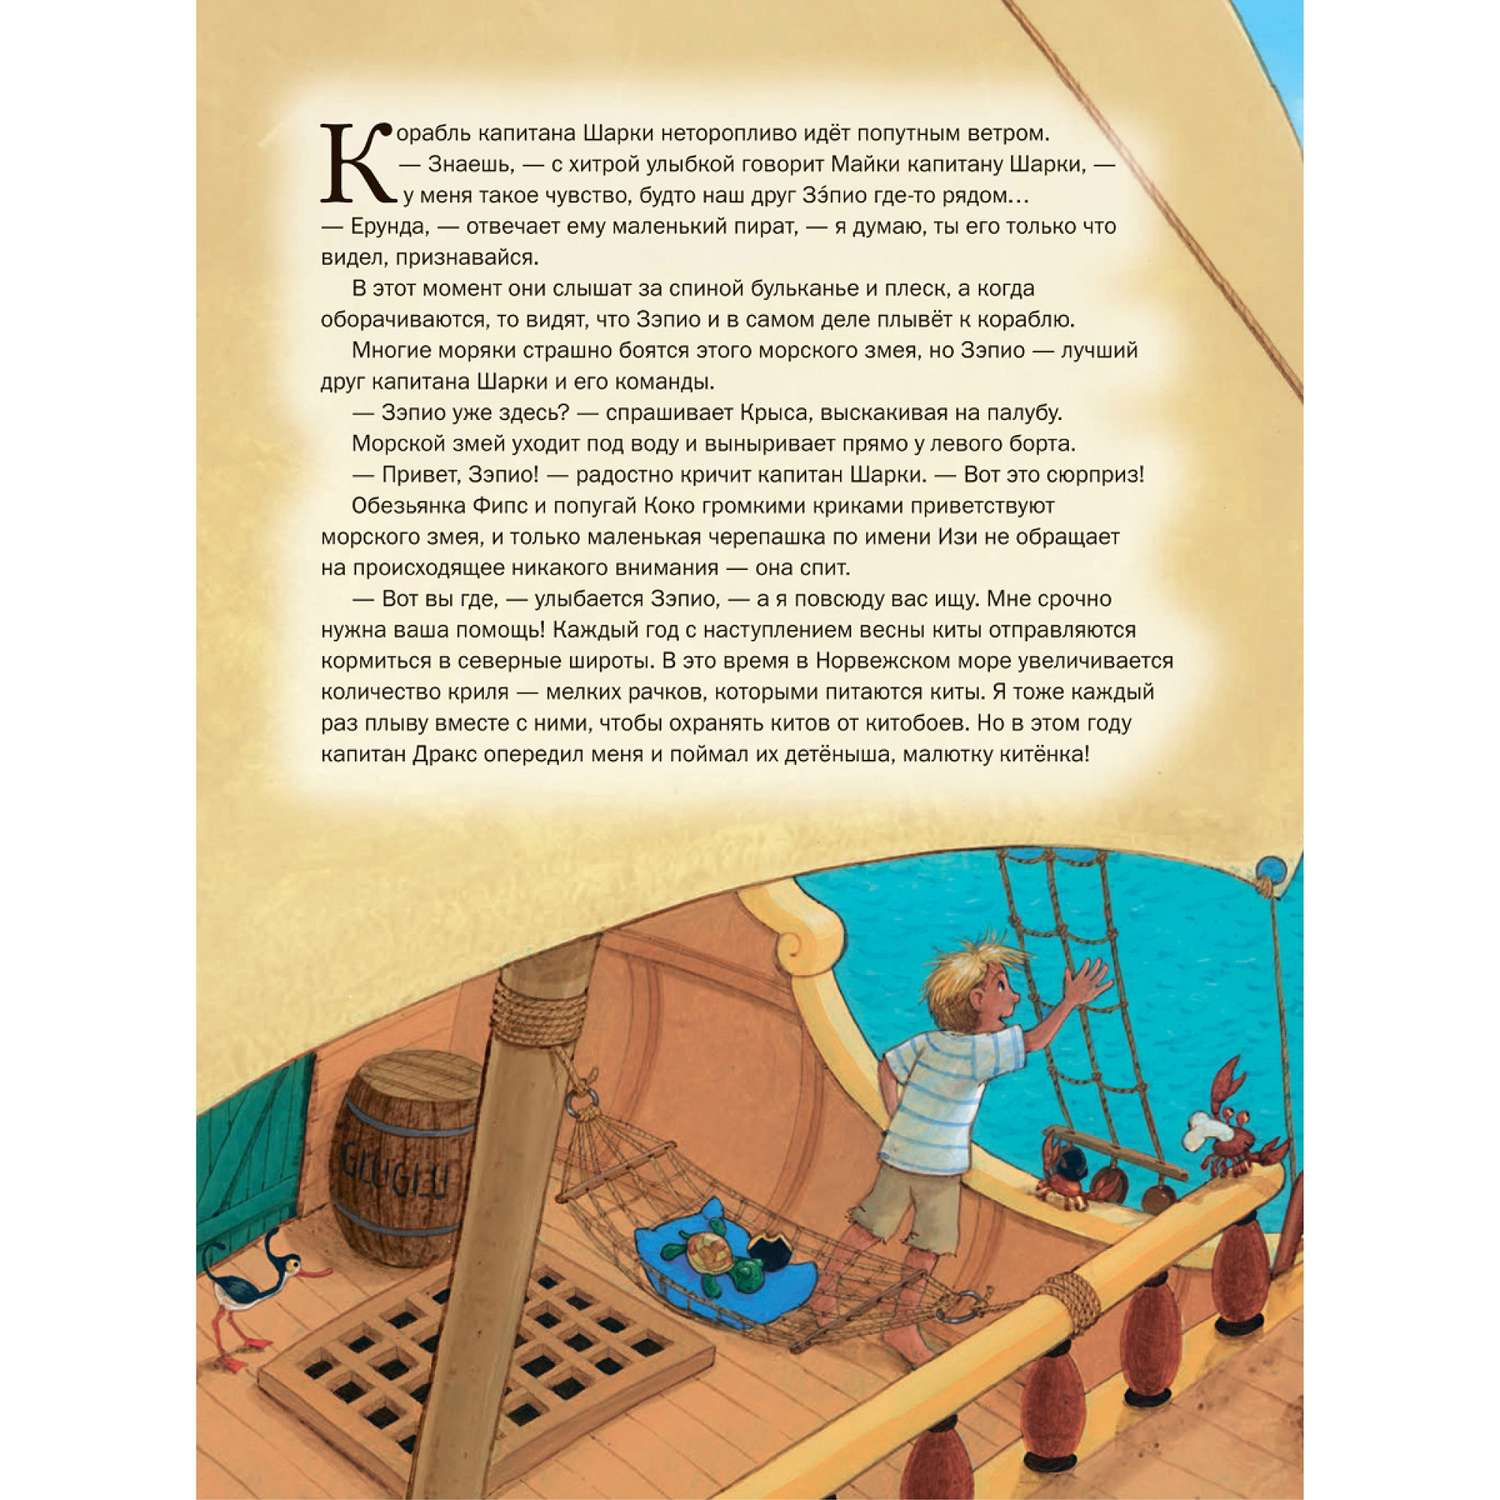 Книга Добрая книга Капитан Шарки спасает малютку кита. Иллюстрации Сильвио Нойендорфа - фото 6